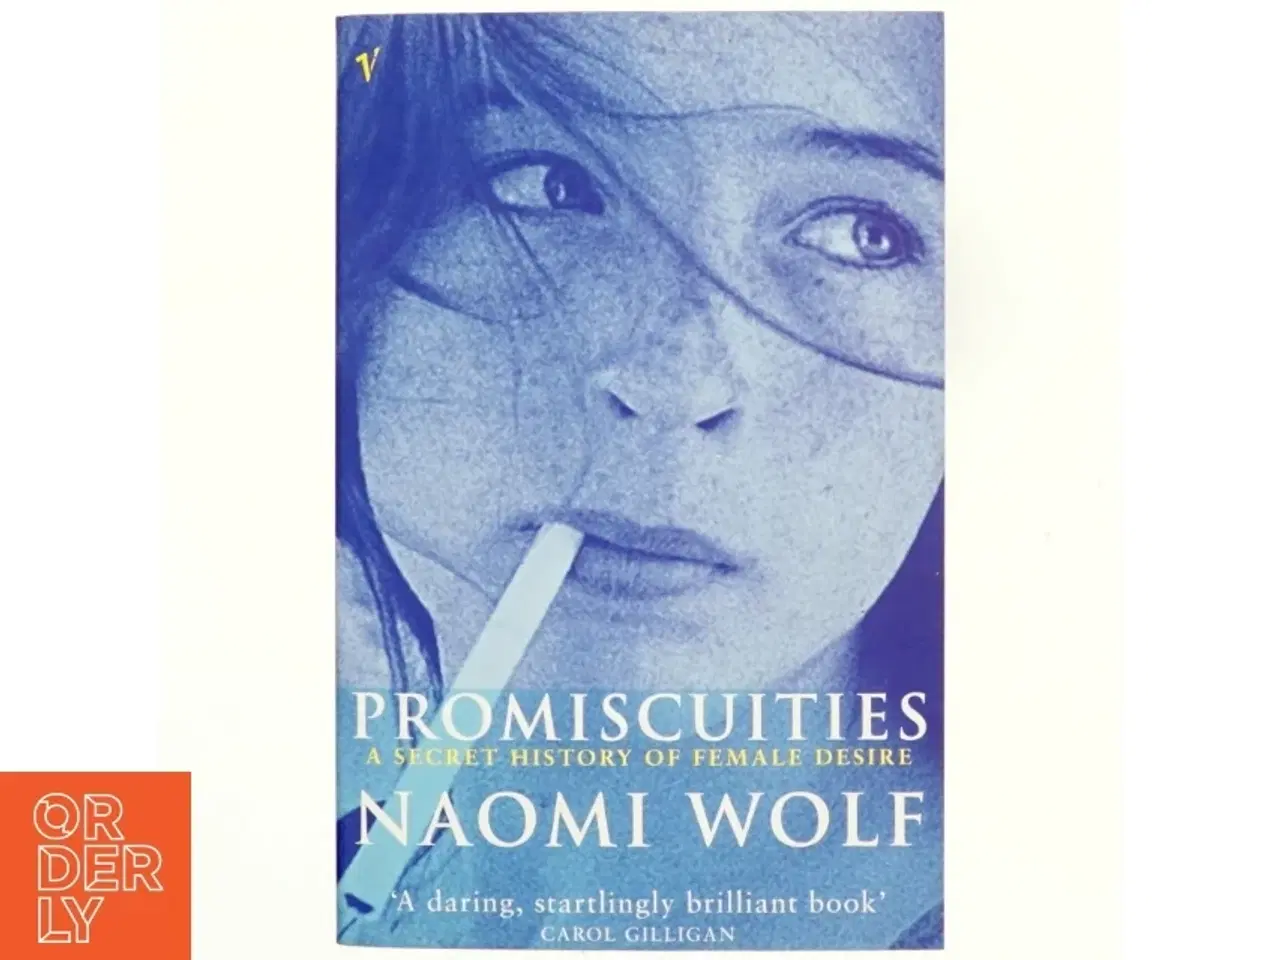 Billede 1 - Promiscuities af Naomi Wolf